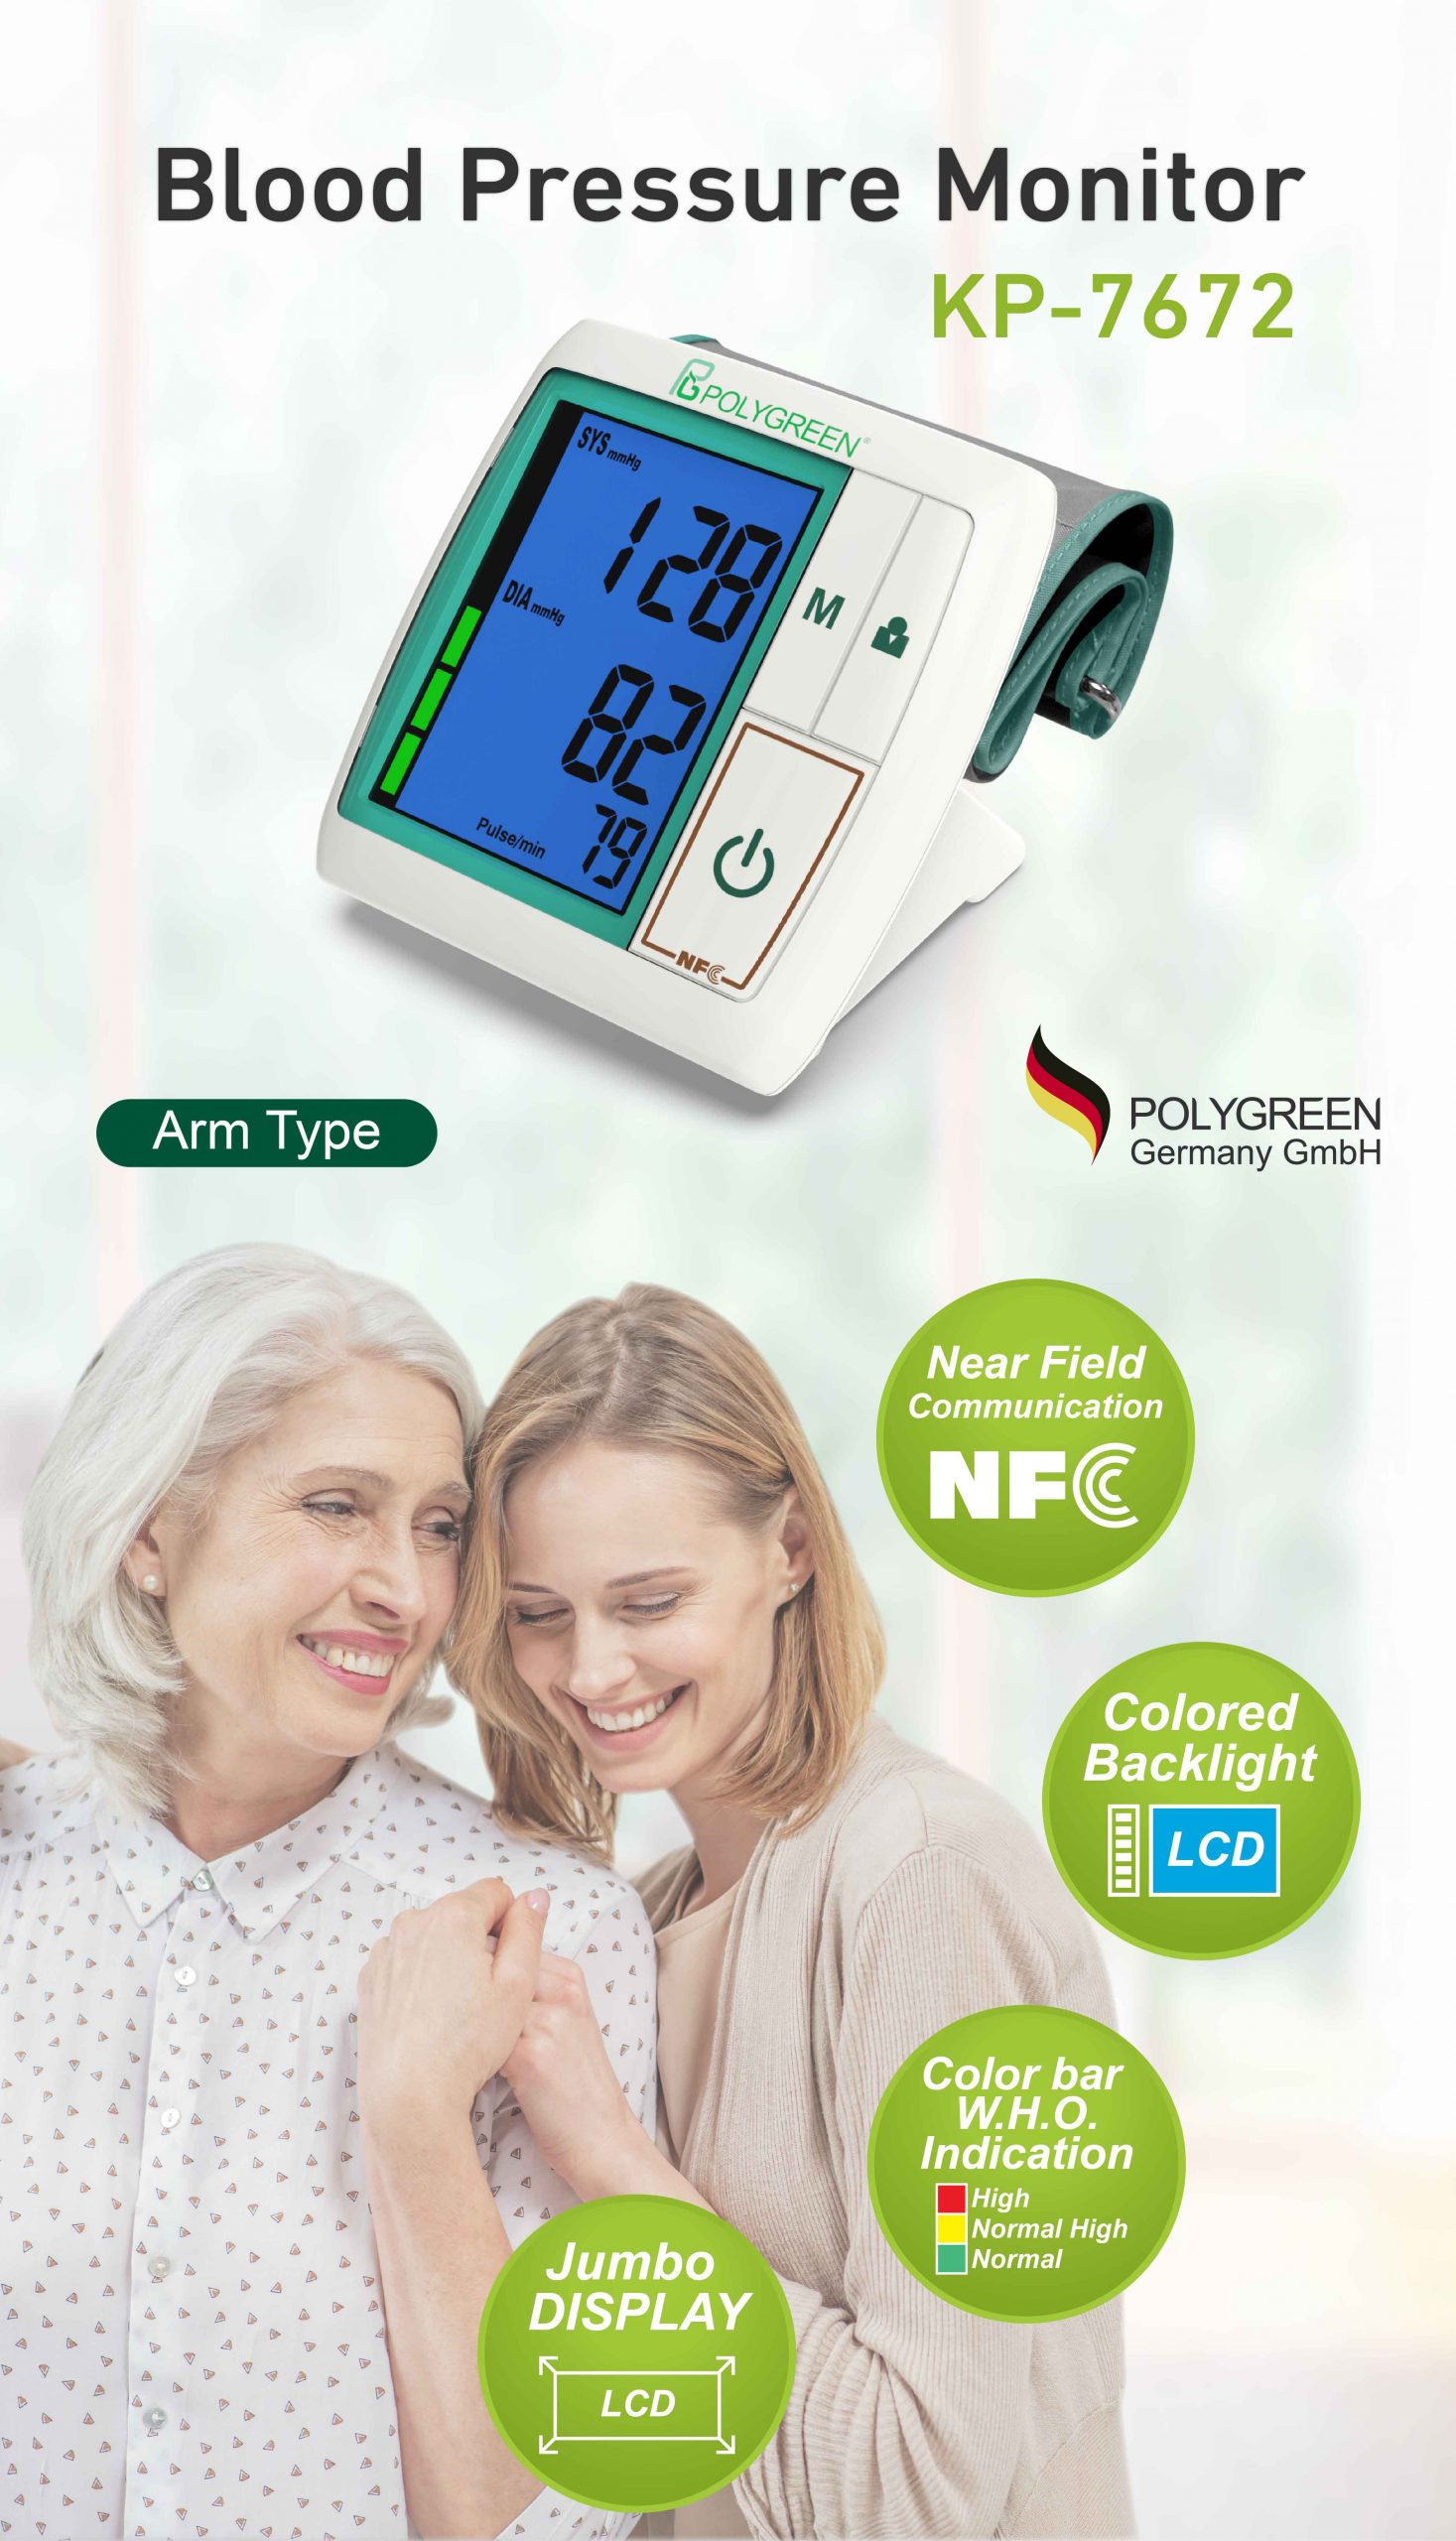 Wrist Blood Pressure Monitor KP-7270: AmperorDirect